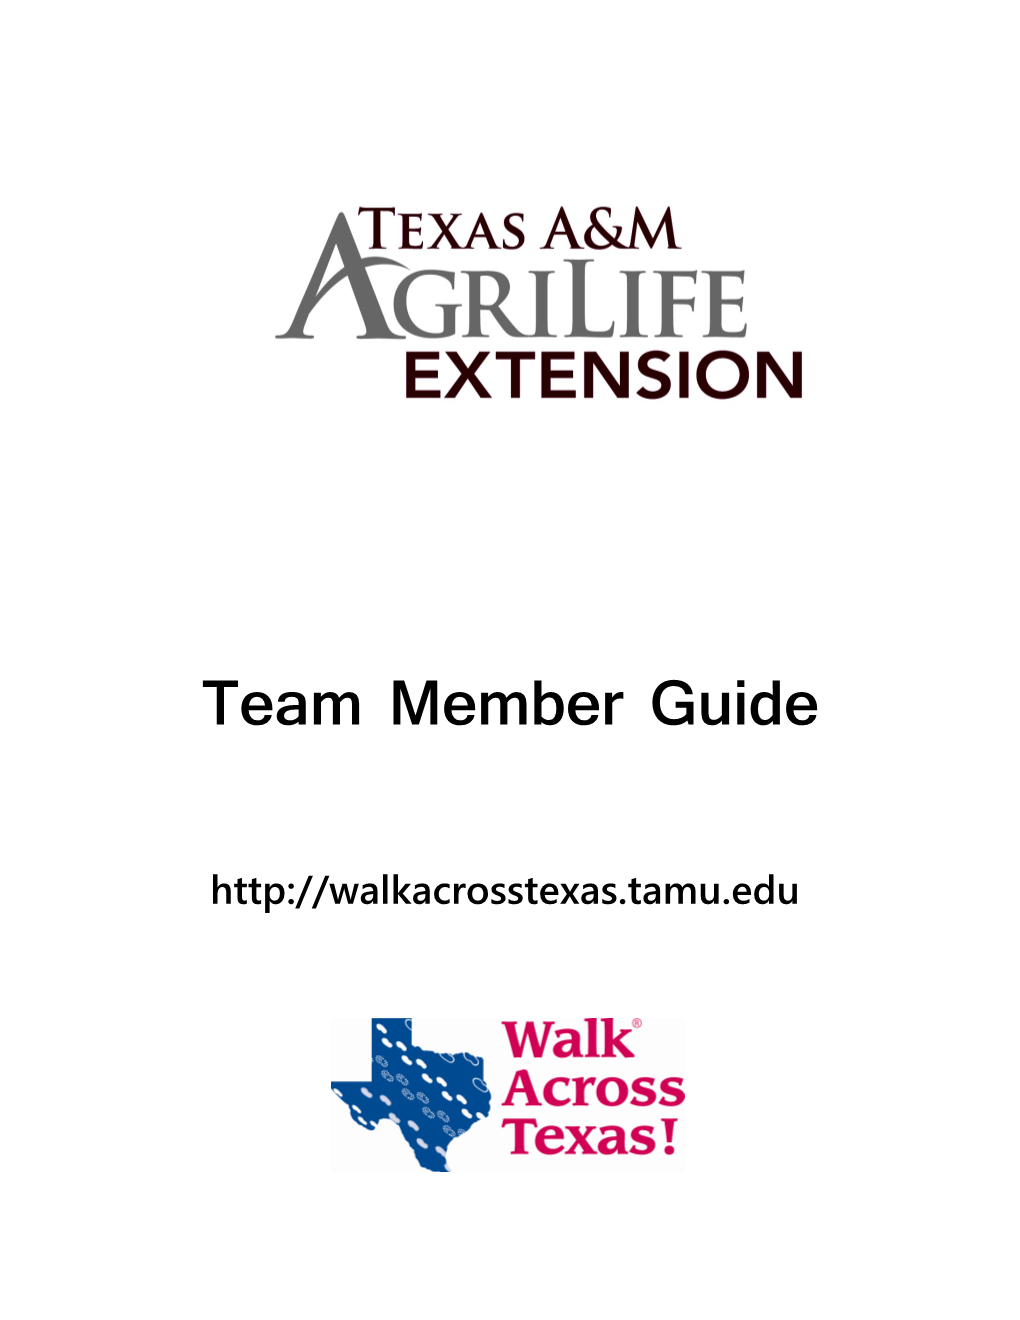 Walk Across Texas! Team Member Guide